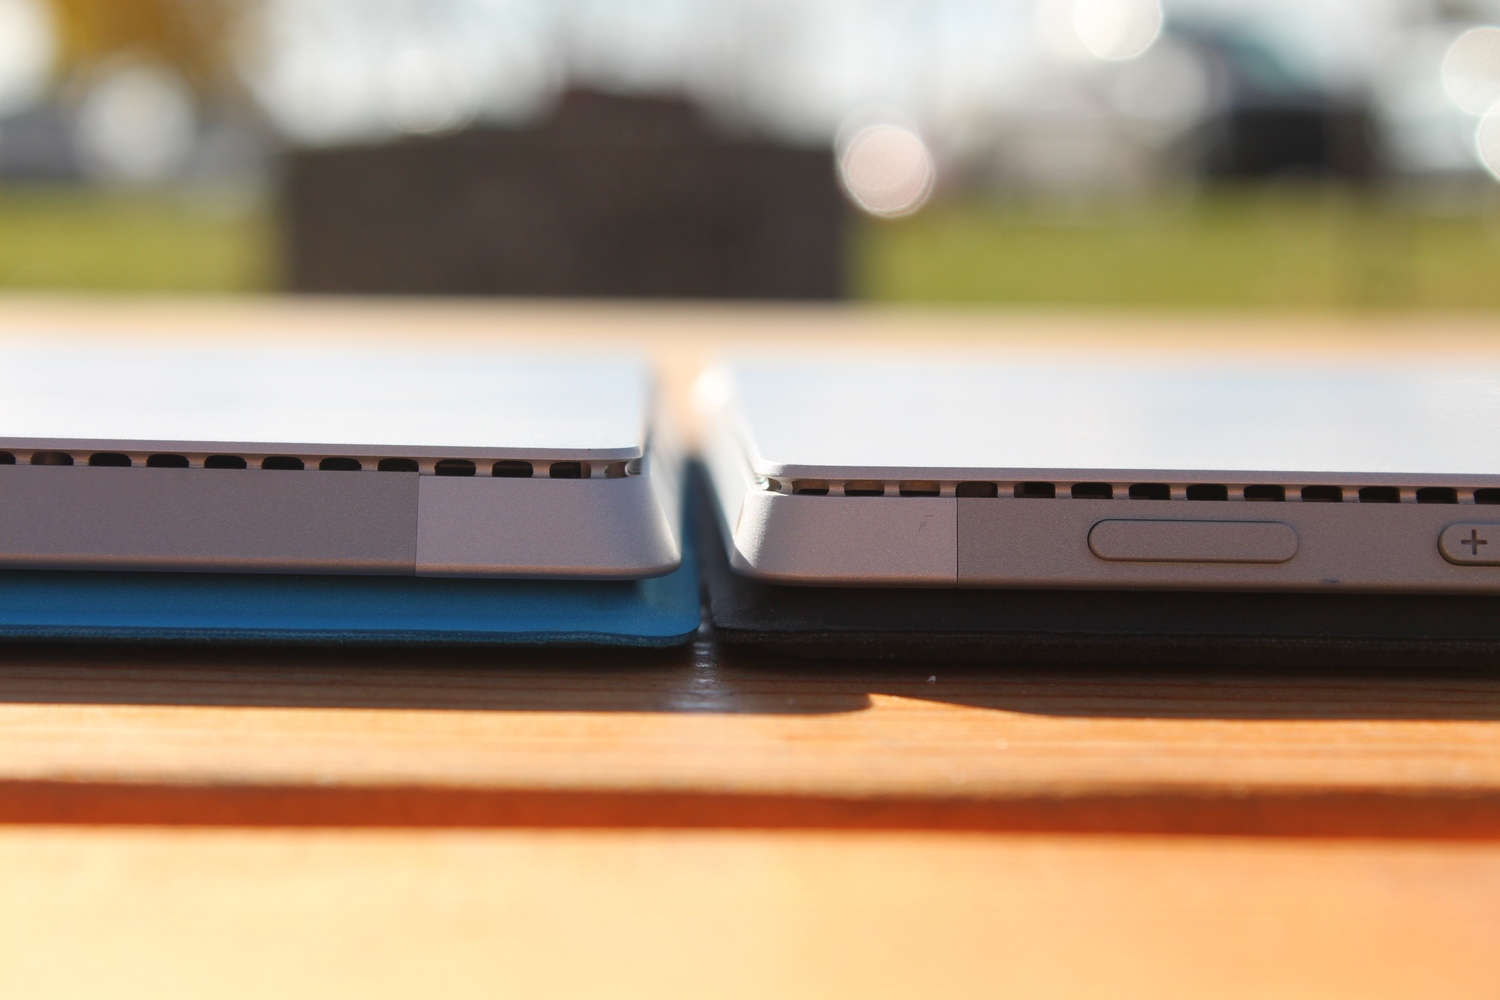 Surface Pro 4 Design: Thinner, Lighter, Hybrid Cooling - The Microsoft